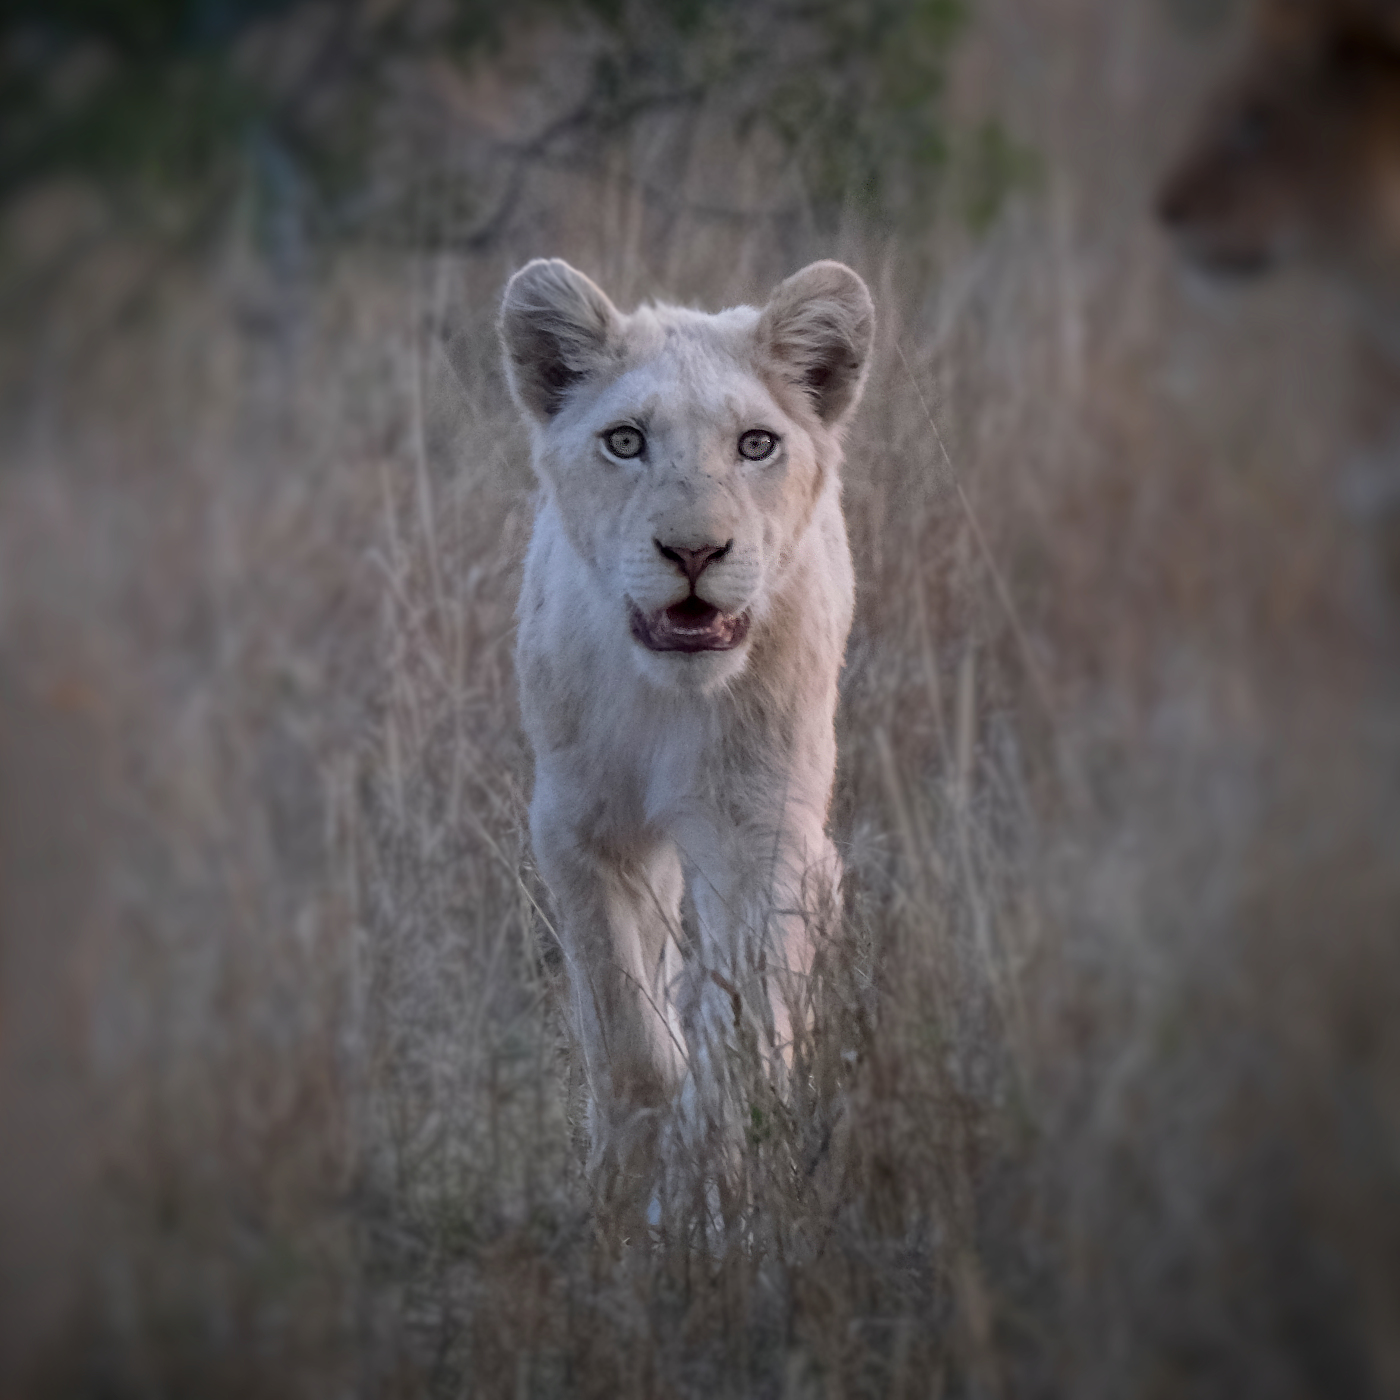 White Lion Cub by Frank St-Pierre